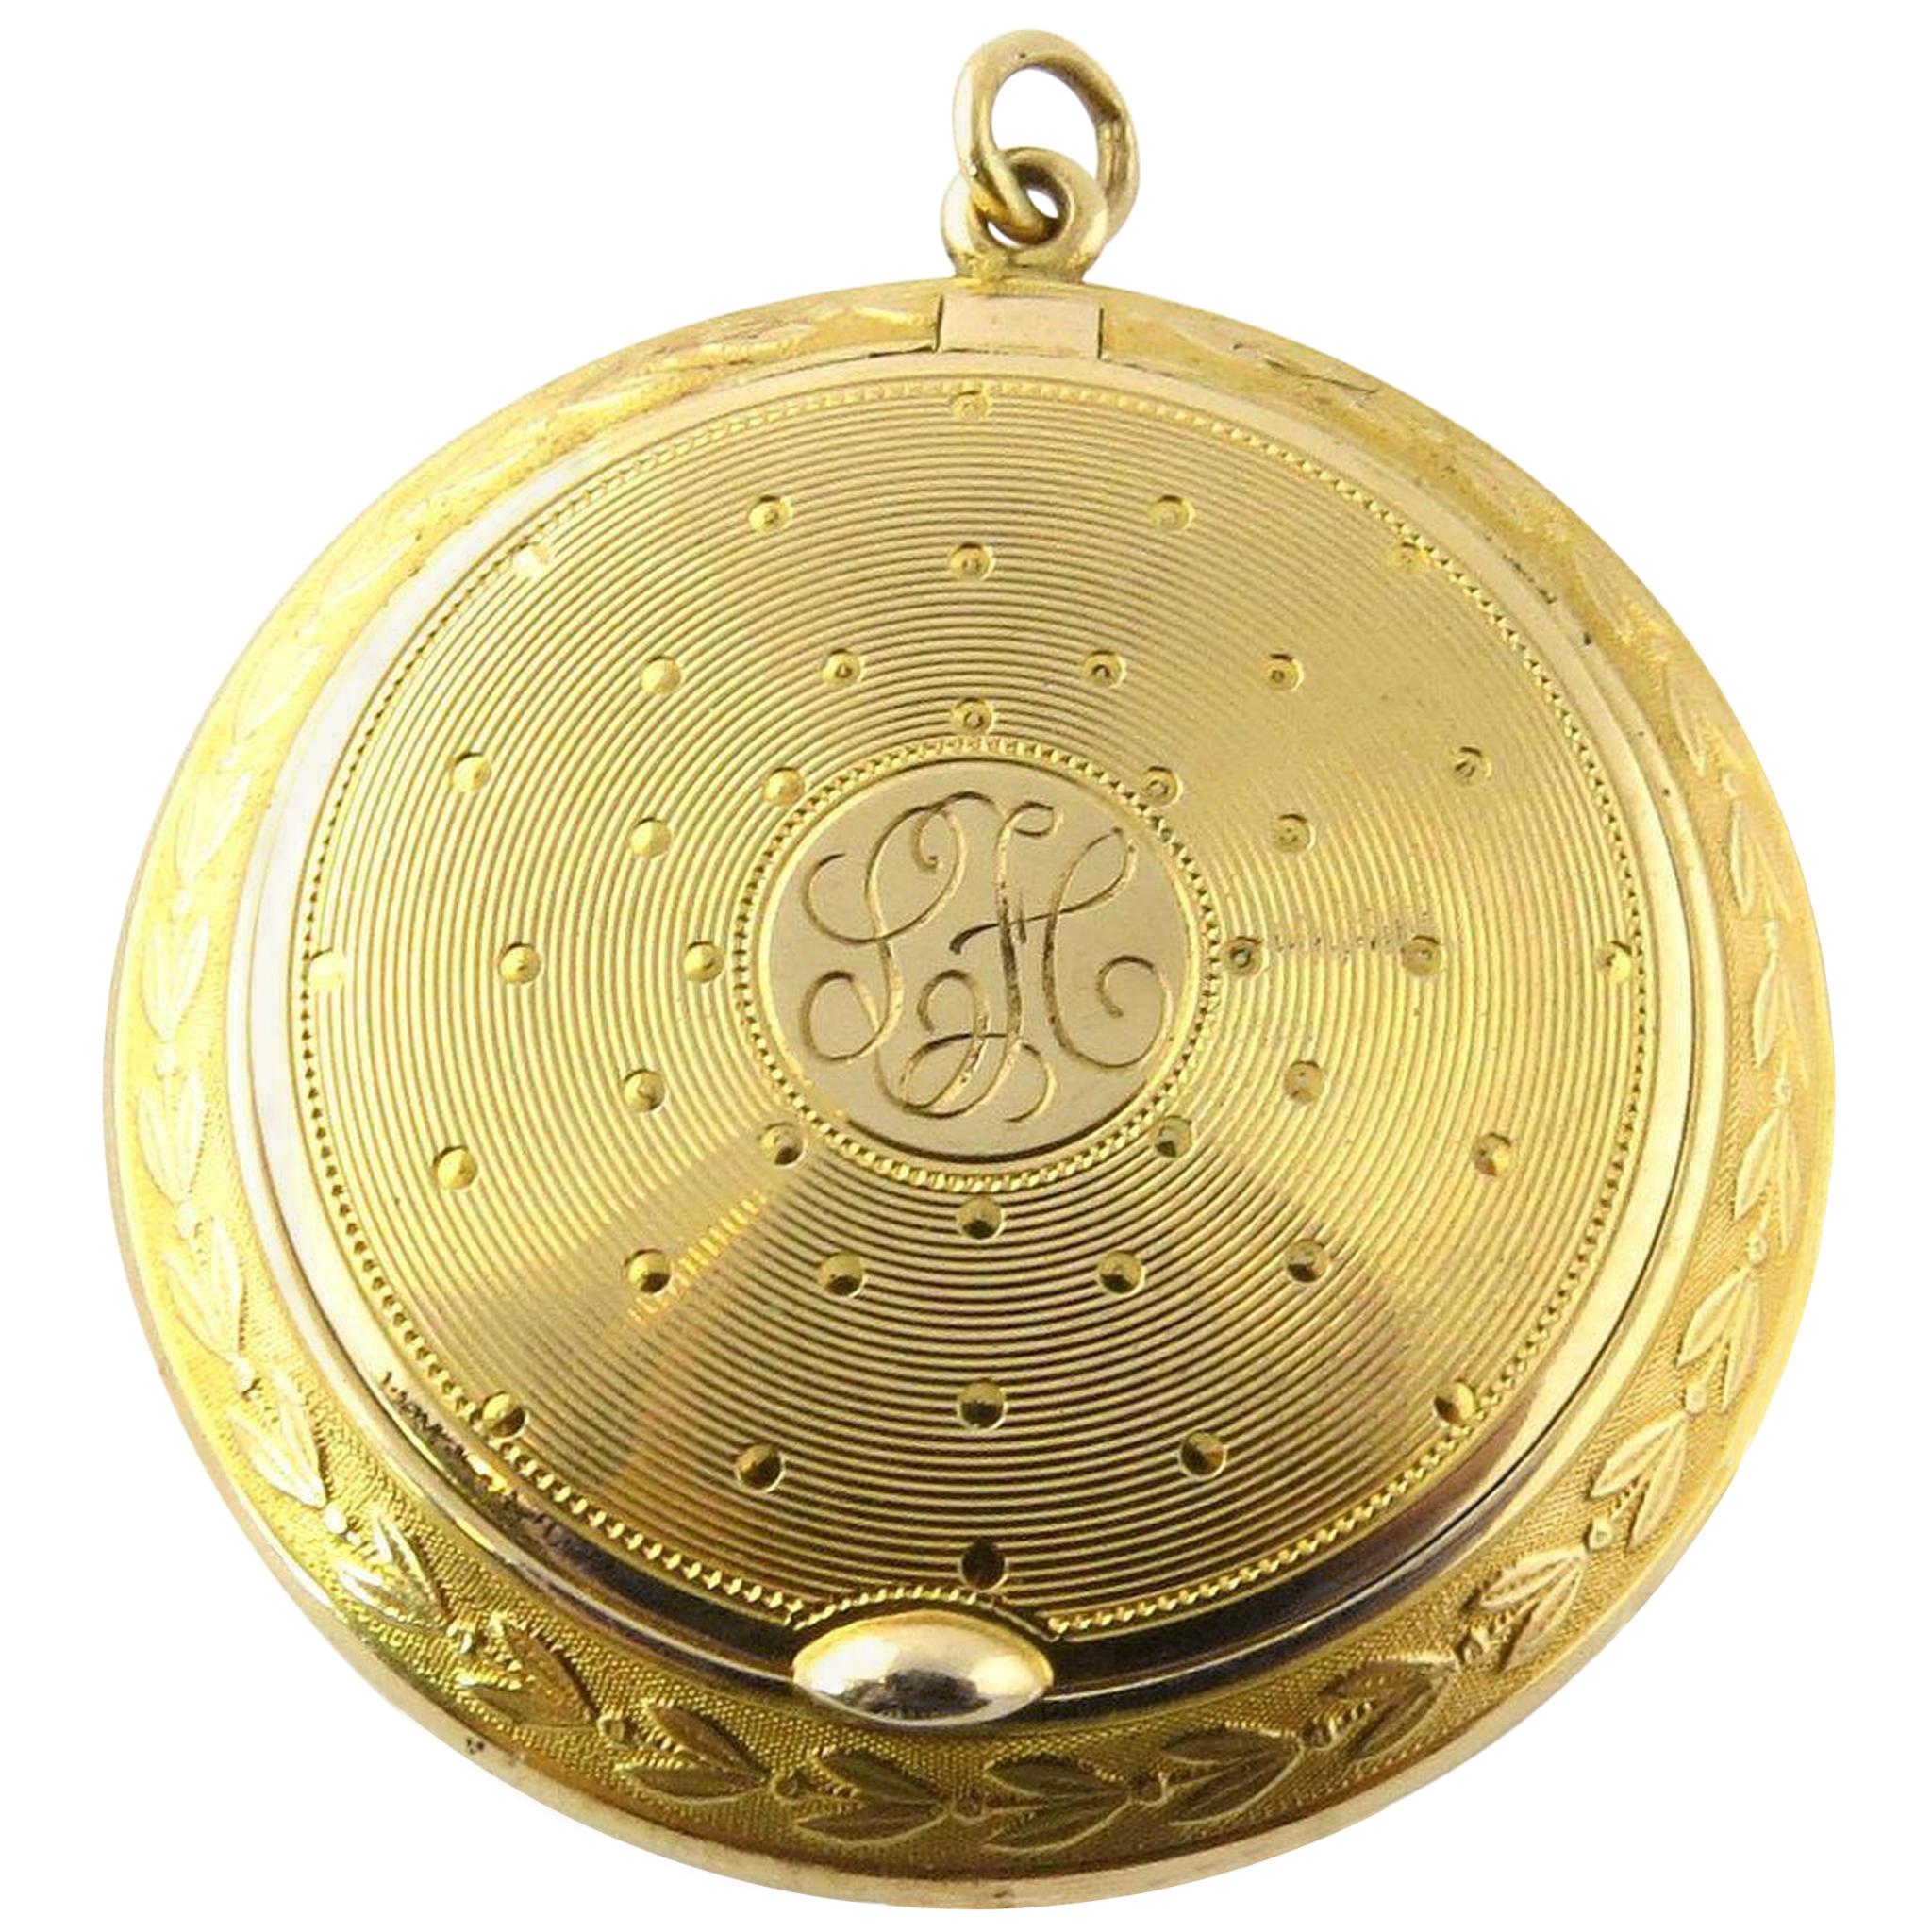 Antique 14 Karat Yellow Gold Locket and Compact Snuff Box Pendant